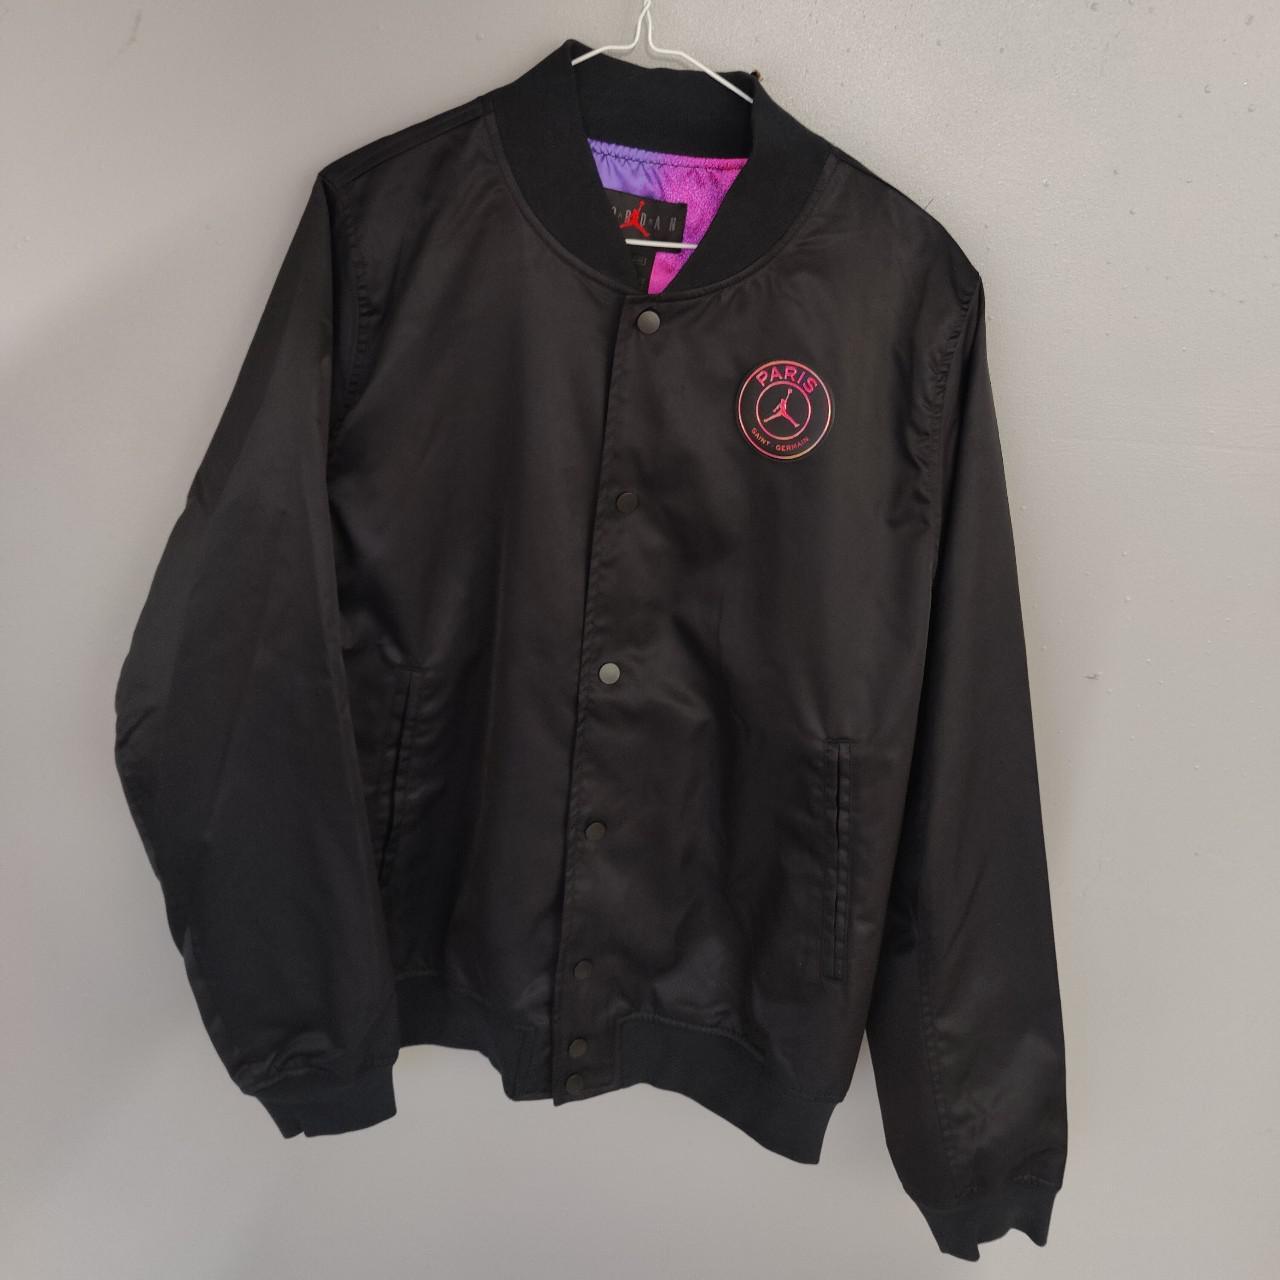 Jordan Men's Black and Purple Jacket | Depop